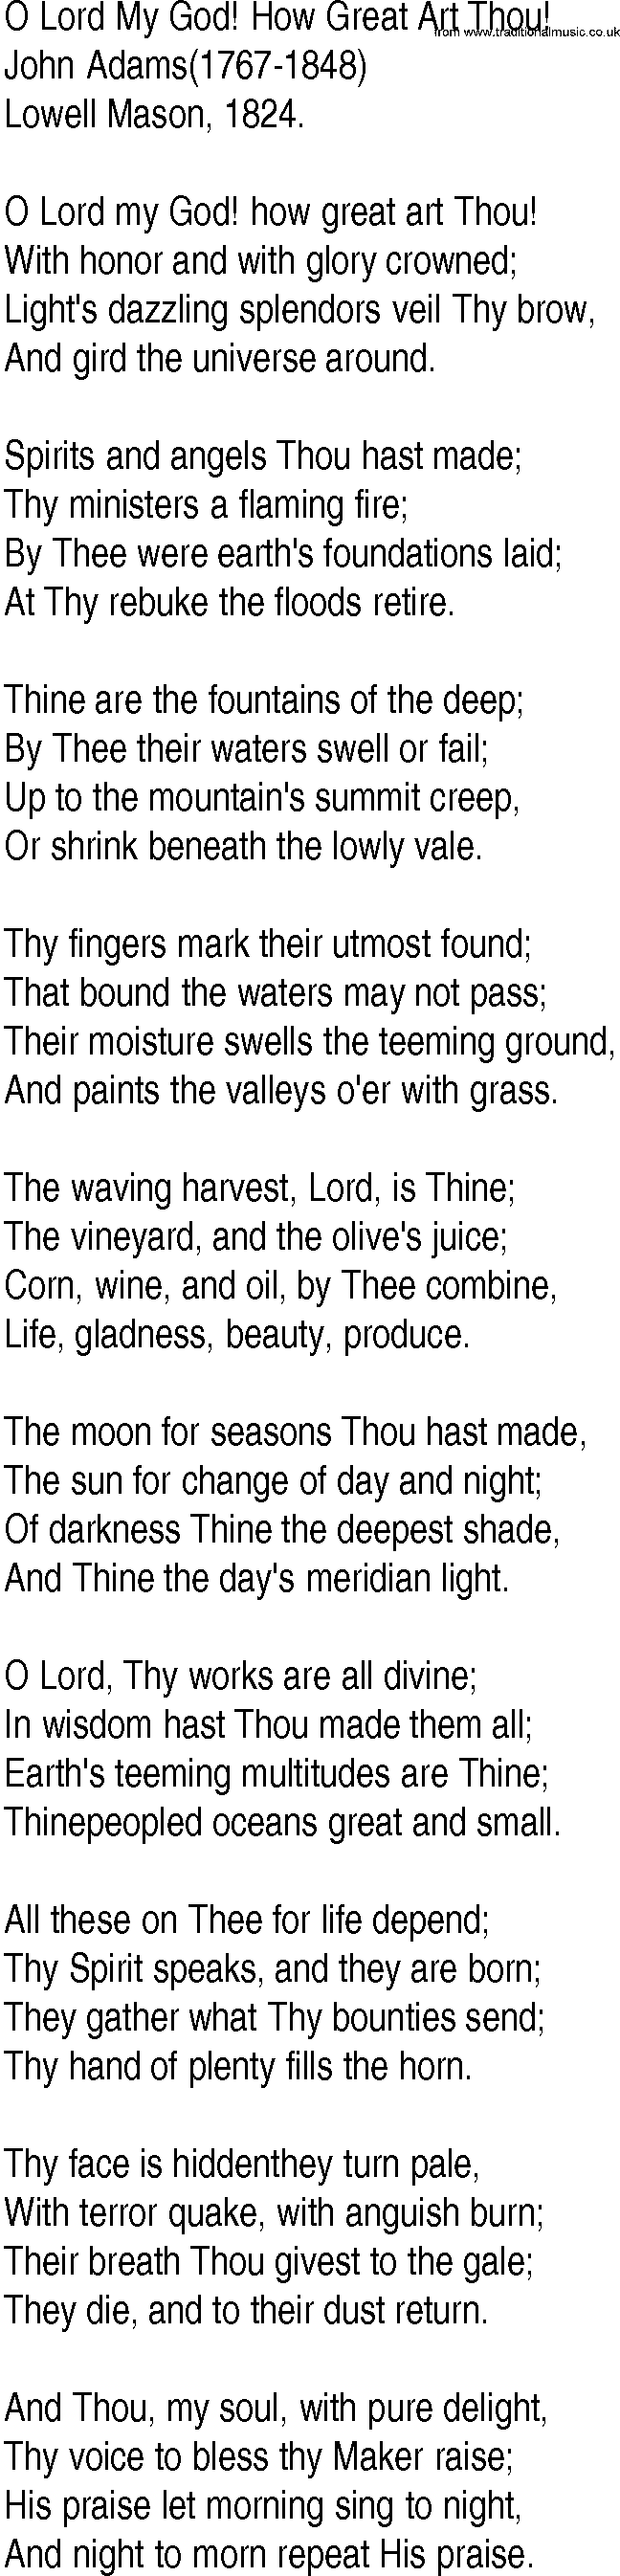 Hymn and Gospel Song: O Lord My God! How Great Art Thou! by John Adams lyrics